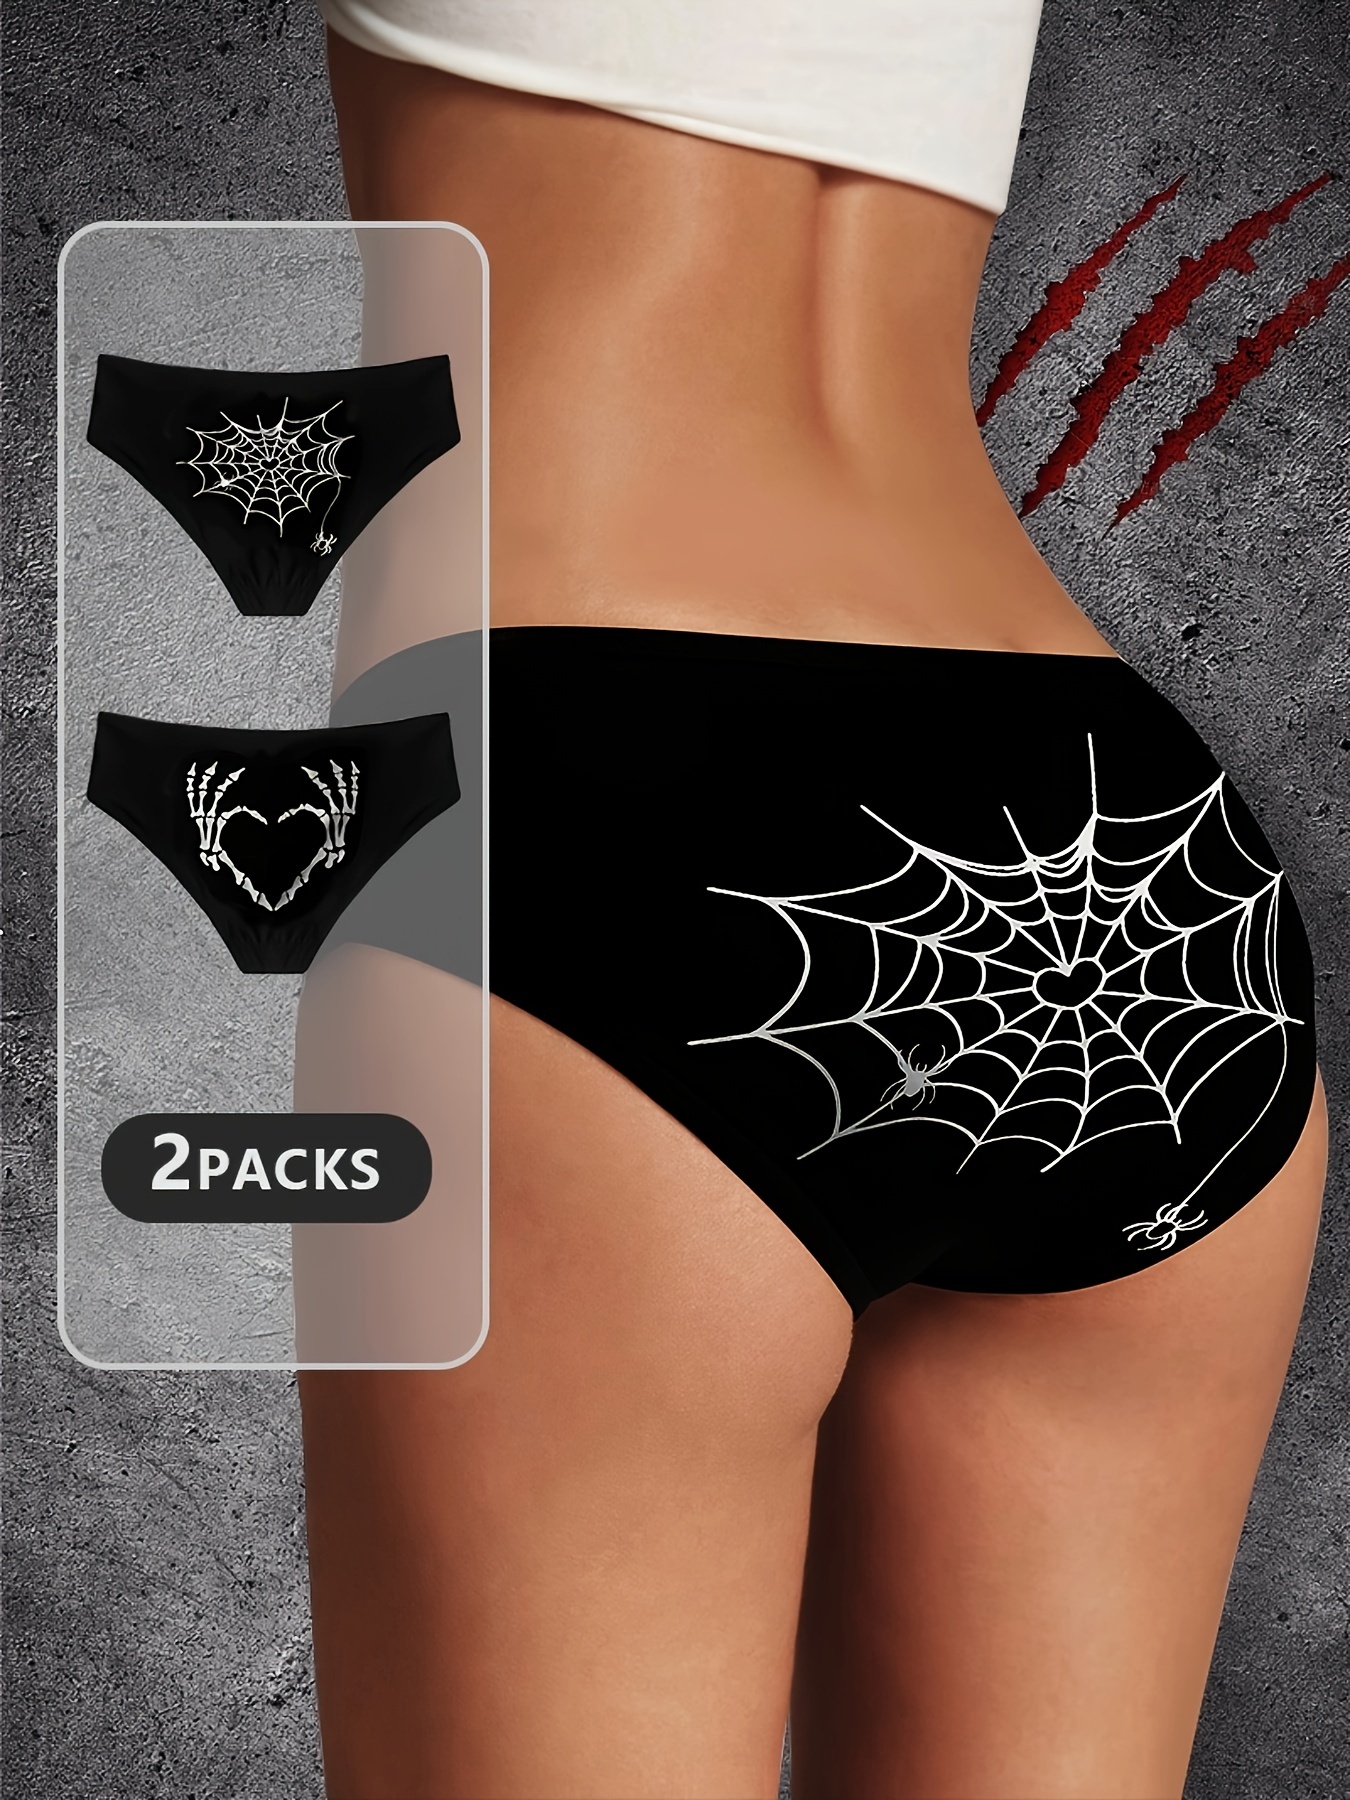 Torrid Cheeky Panties Underwear Spider Web Henley Halloween Black White 3  22 24